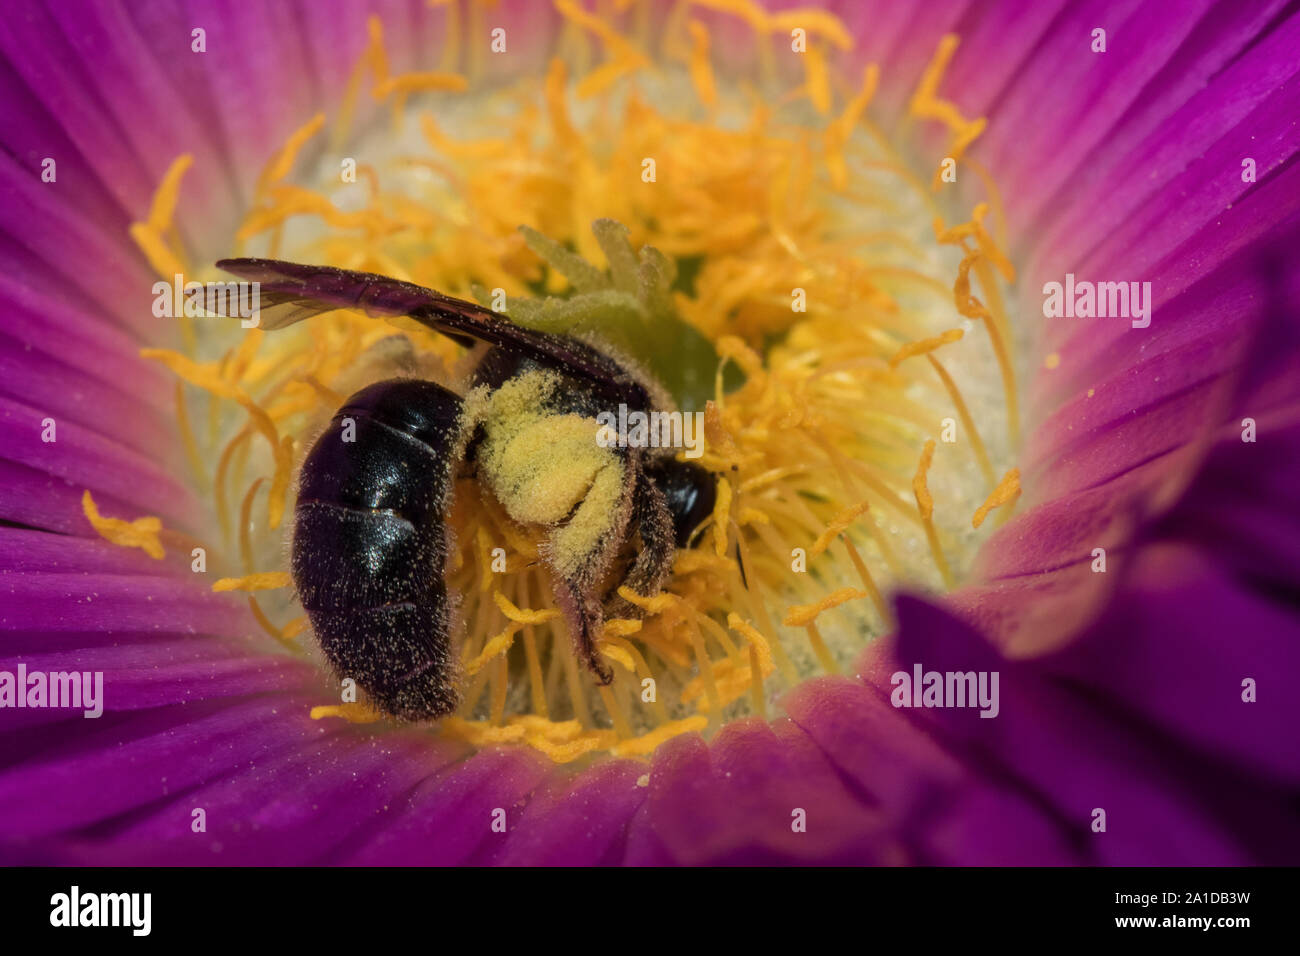 Australian native bee pollinating pig face flower Stock Photo